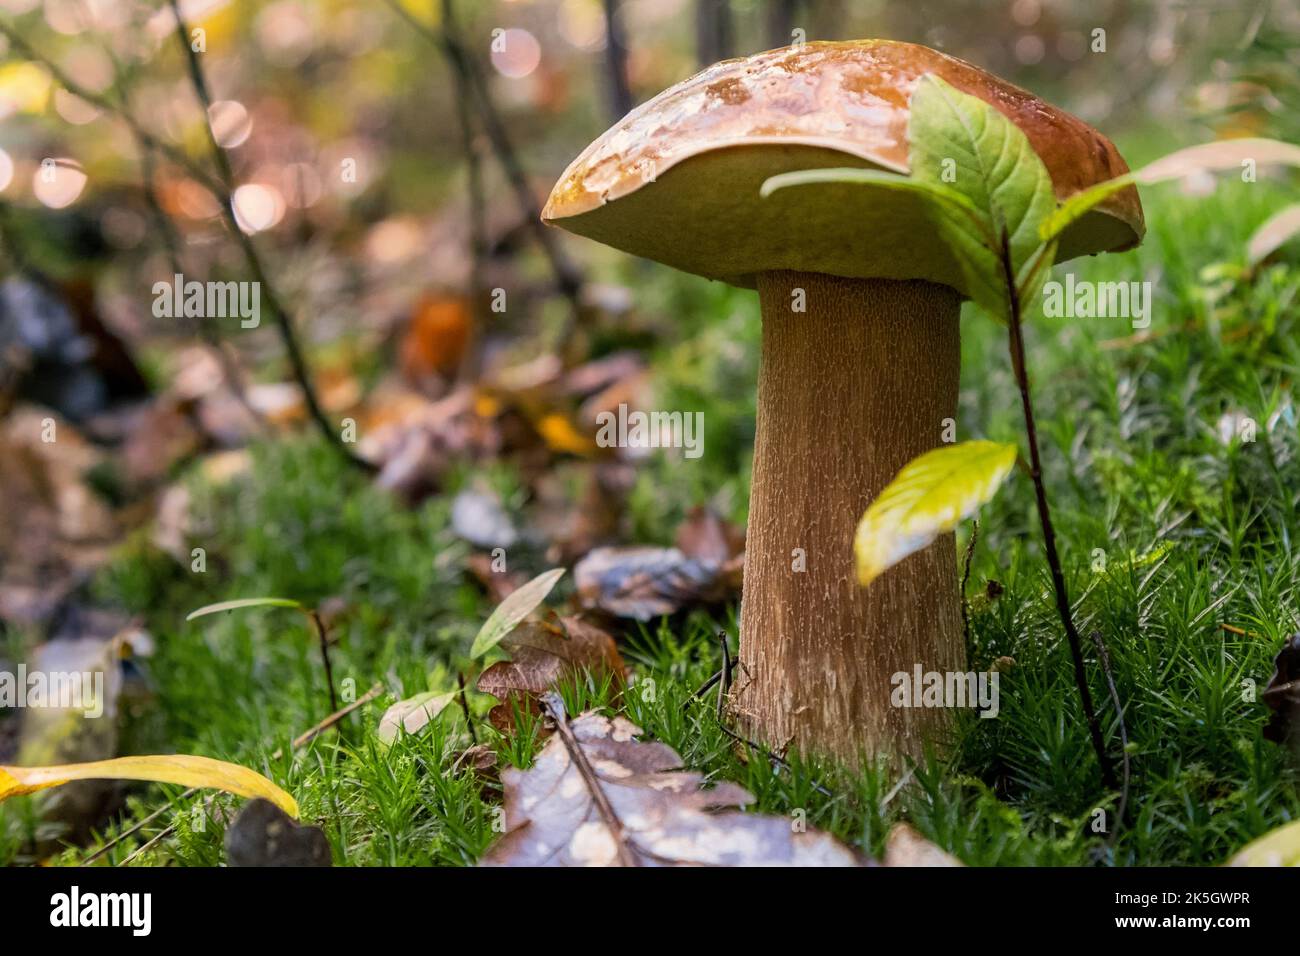 Chestnut mushroom in the autumn forest Stock Photo